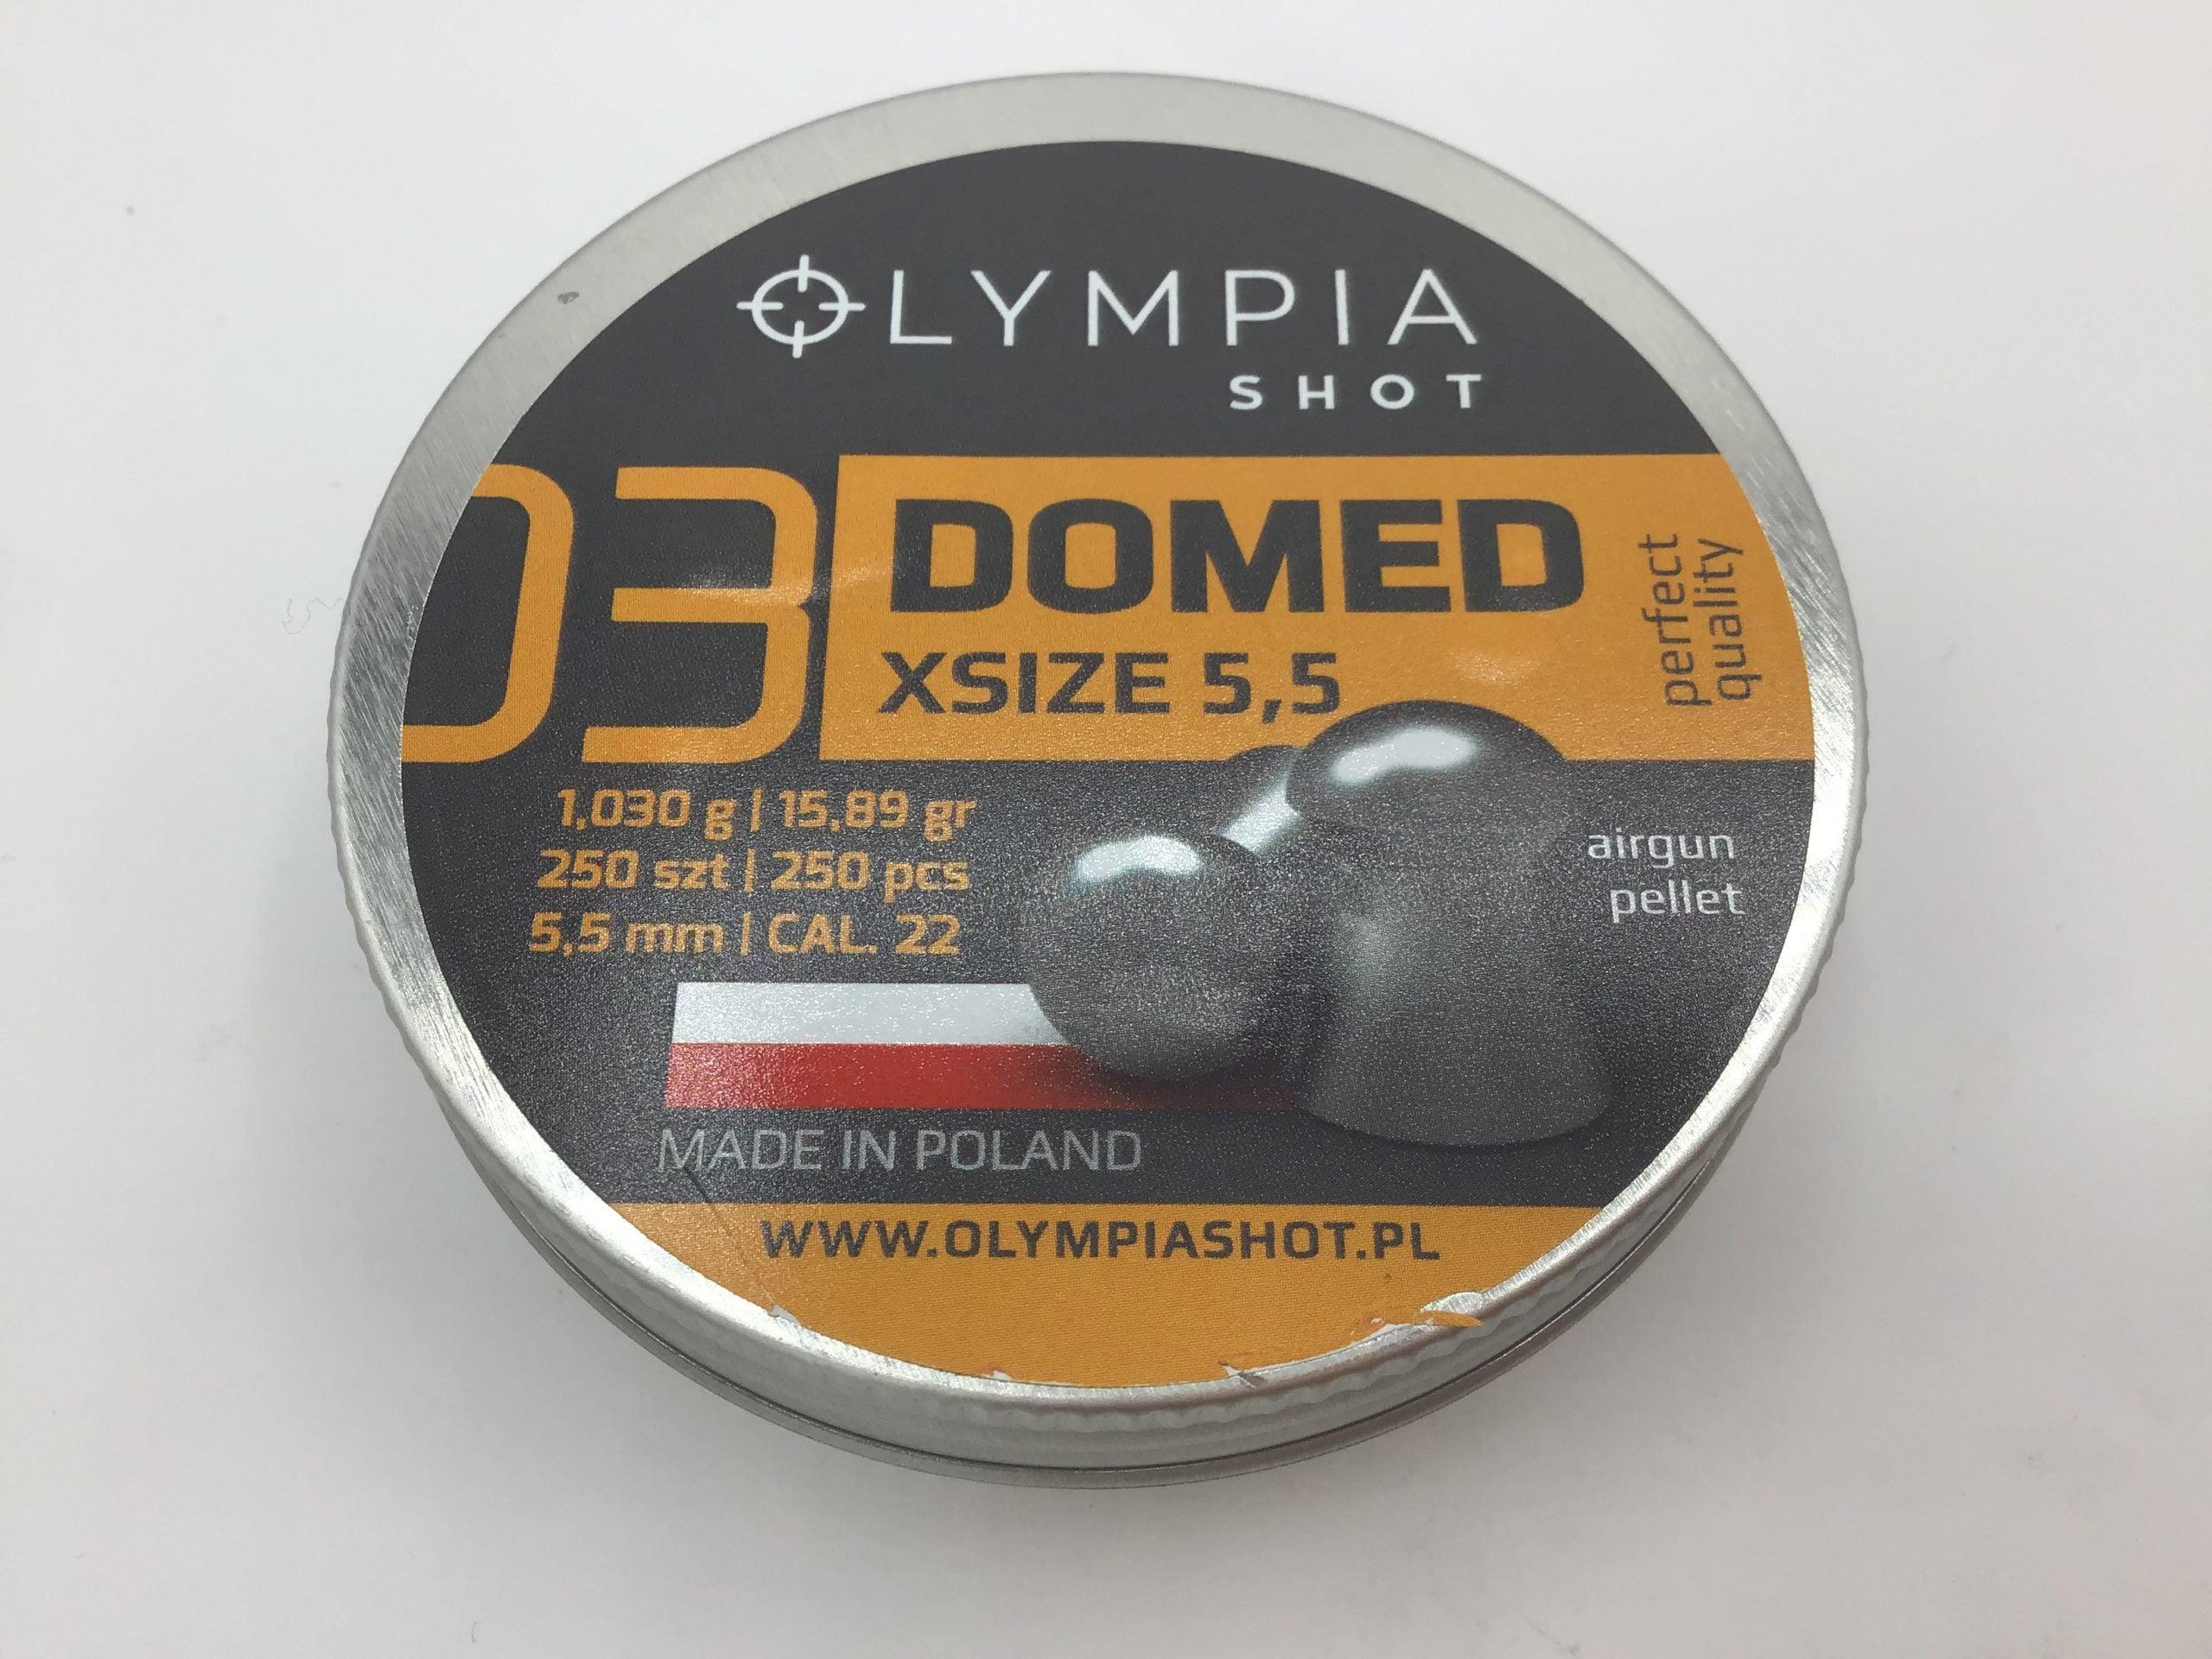 OLYMPIA 5.5MM SHOT DOMED PELLETS 15.89GR - 250'S - NeonSales